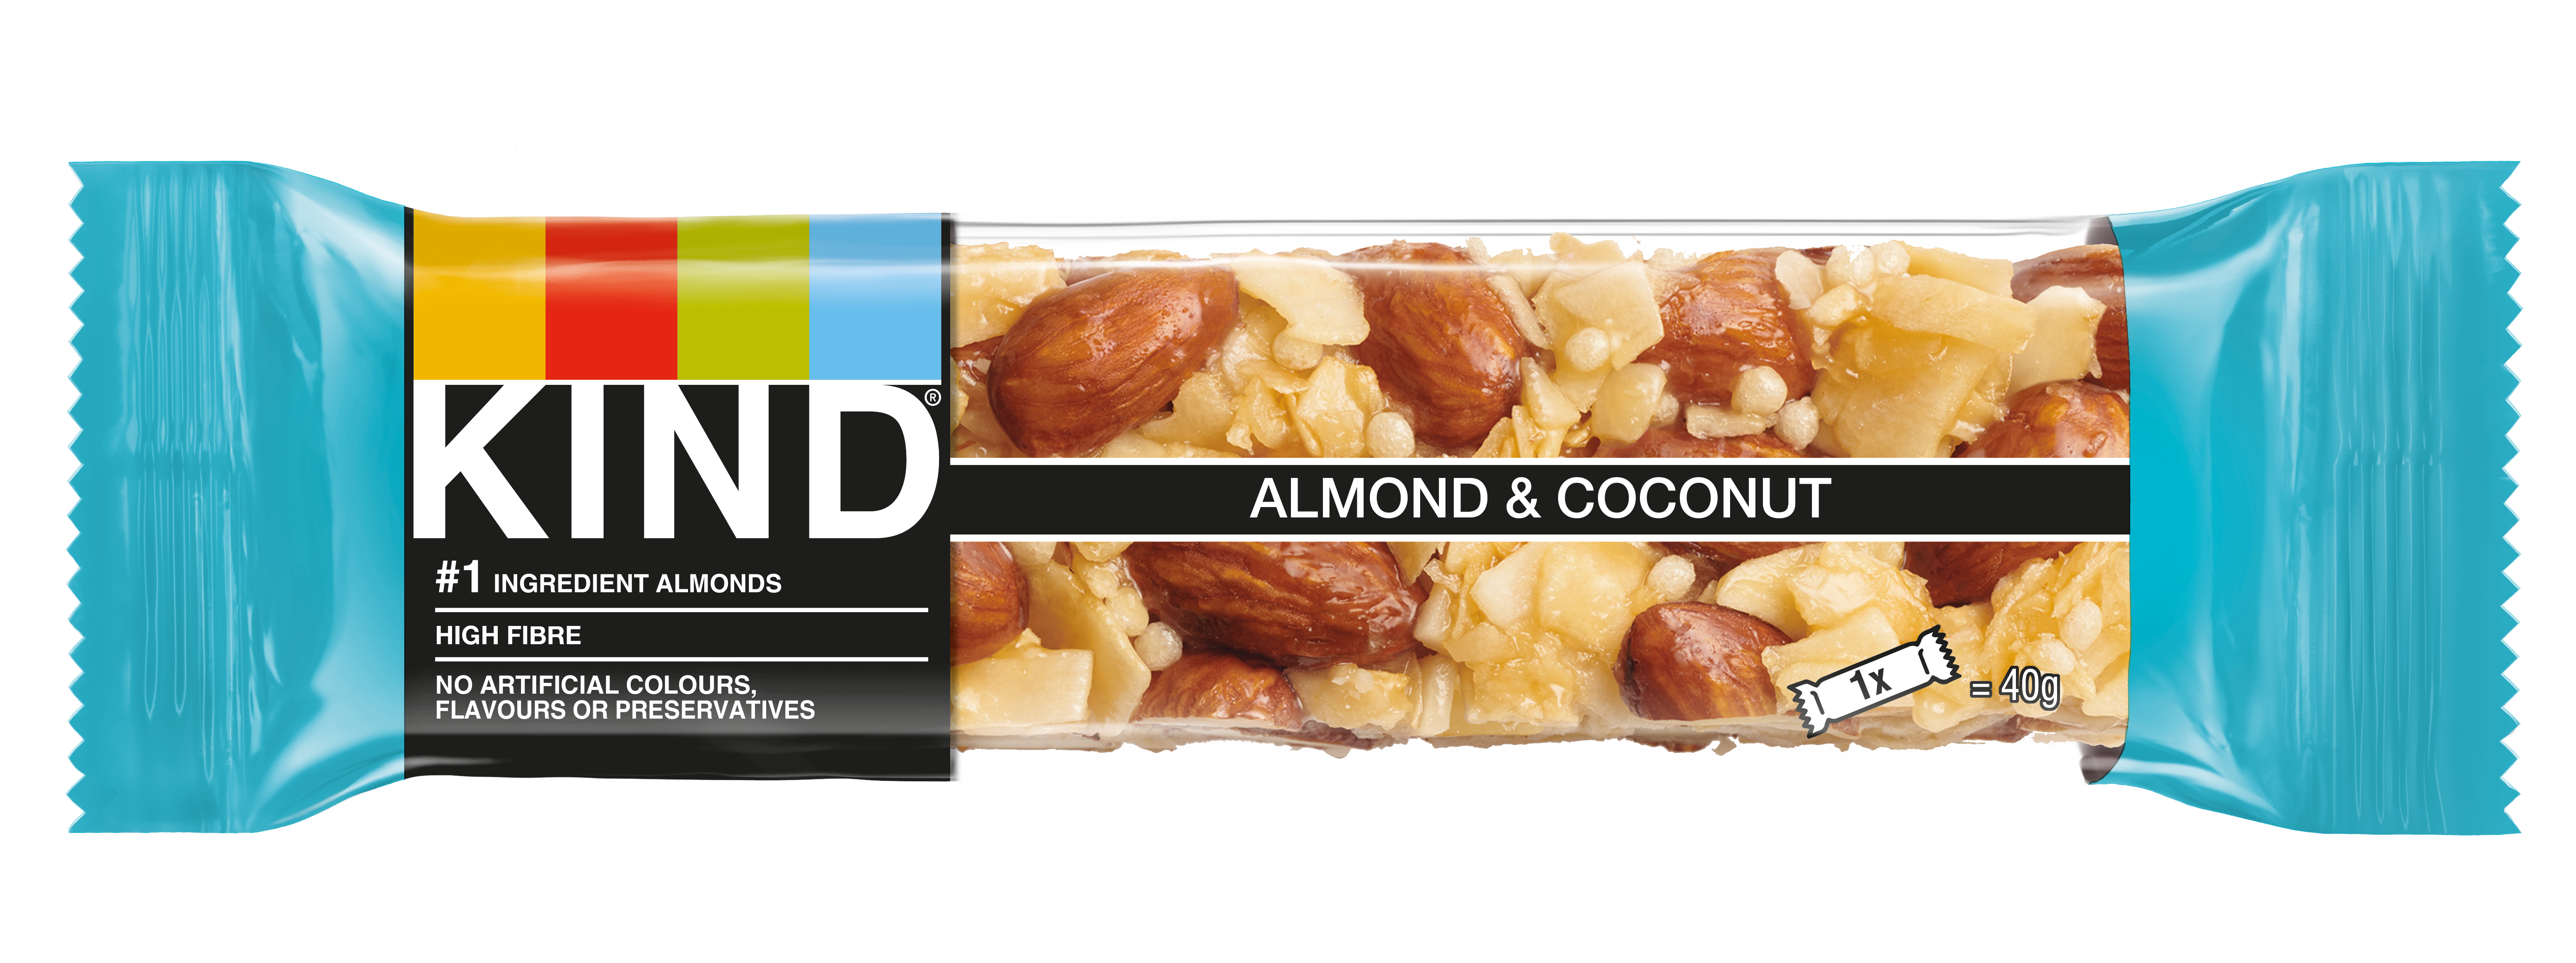 image kind-almond-coconut-40g-fop-2_highfibre_2